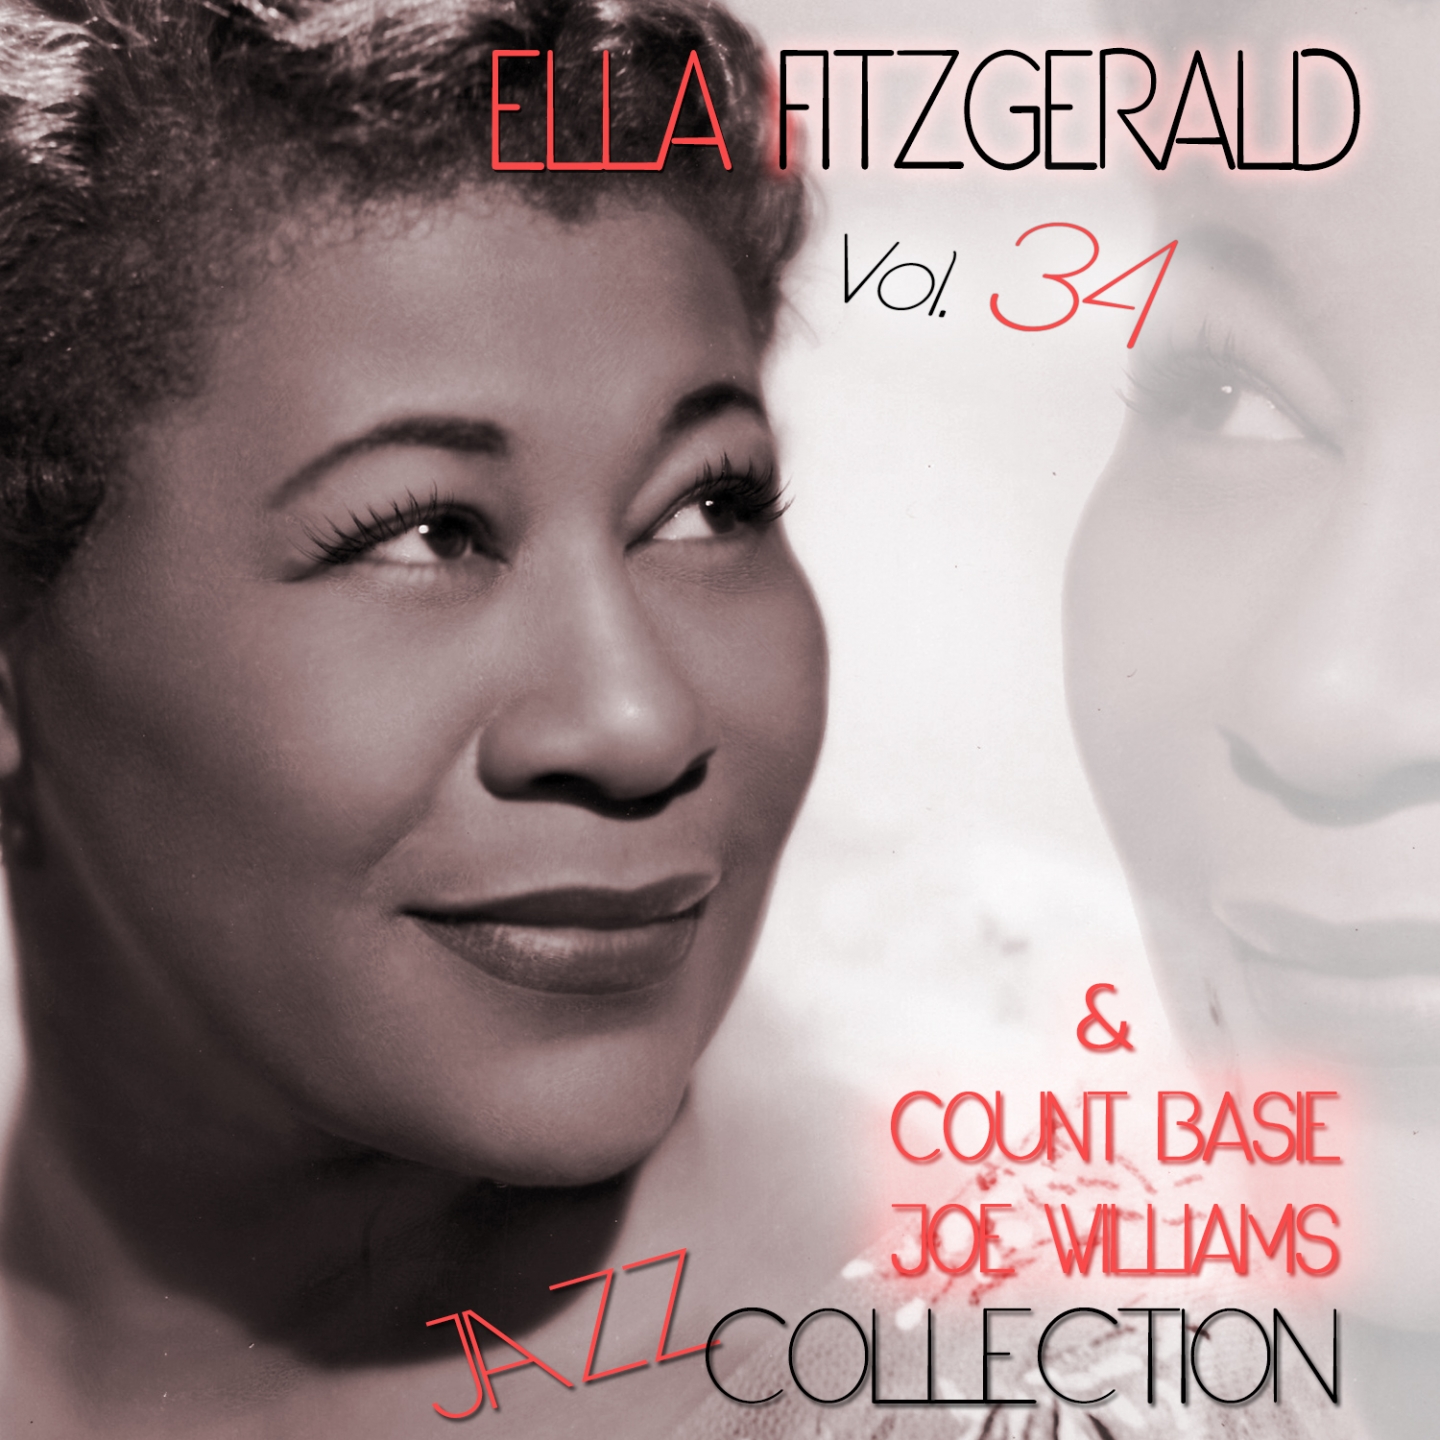 Ella Fitzgerald & Count Basie, Joe Williams: Jazz Collection, Vol. 34 (Remastered)